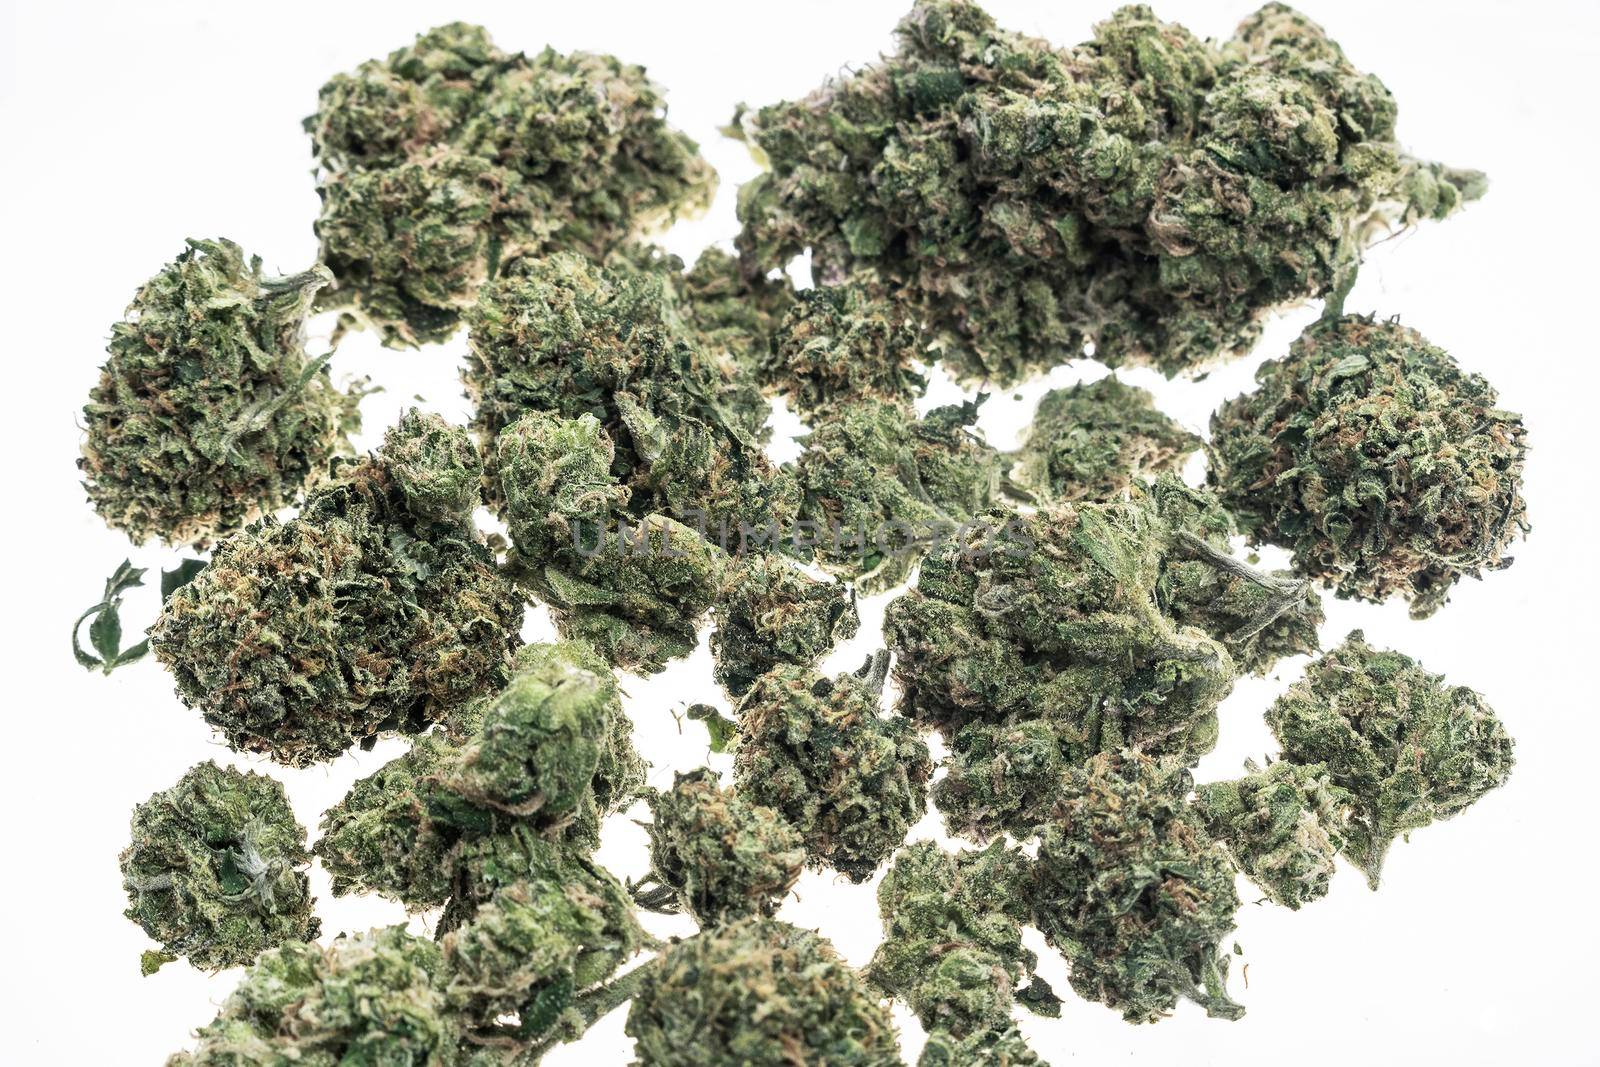 medical marijuana cannabis buds closeup on white studio background in amsterdam